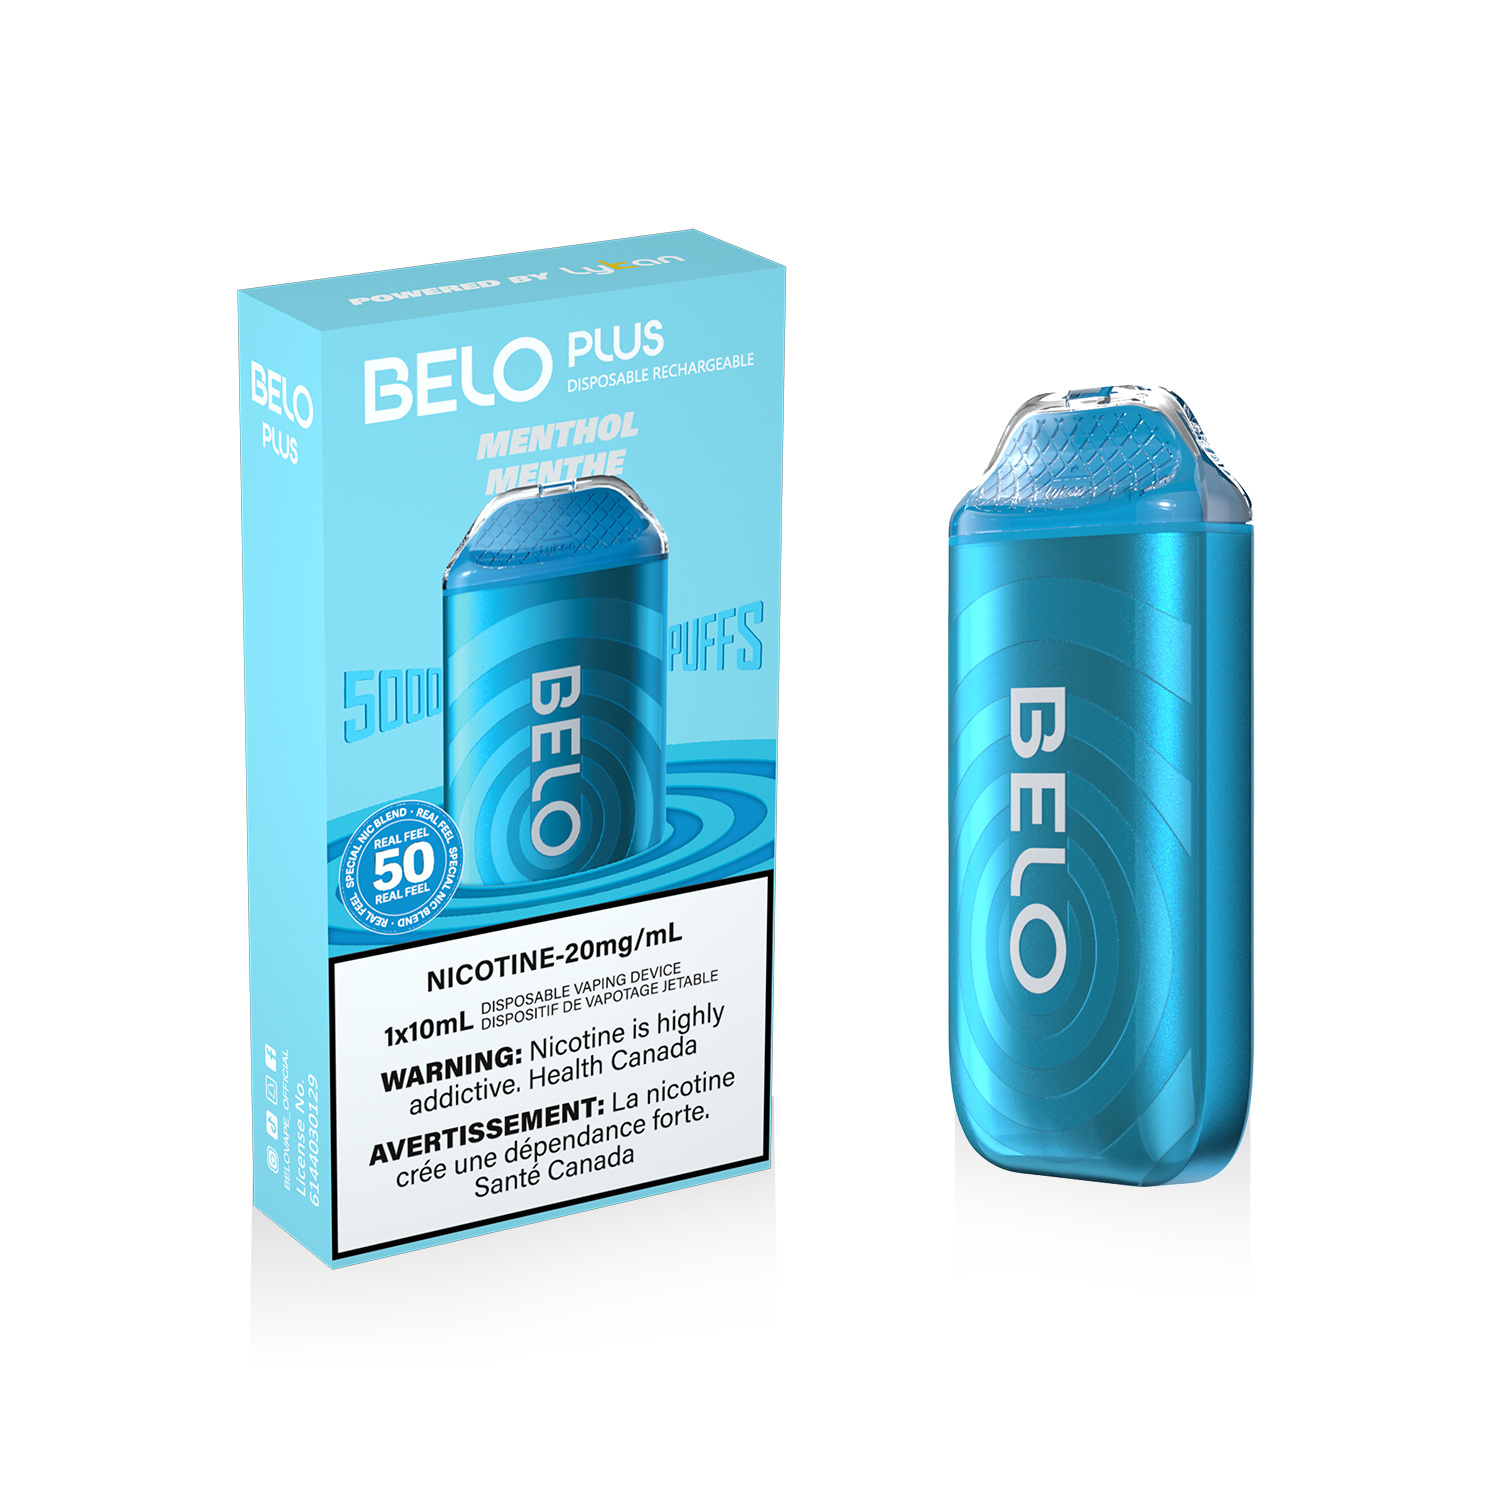 BELO BELO Plus - Menthol (Excise Taxed)